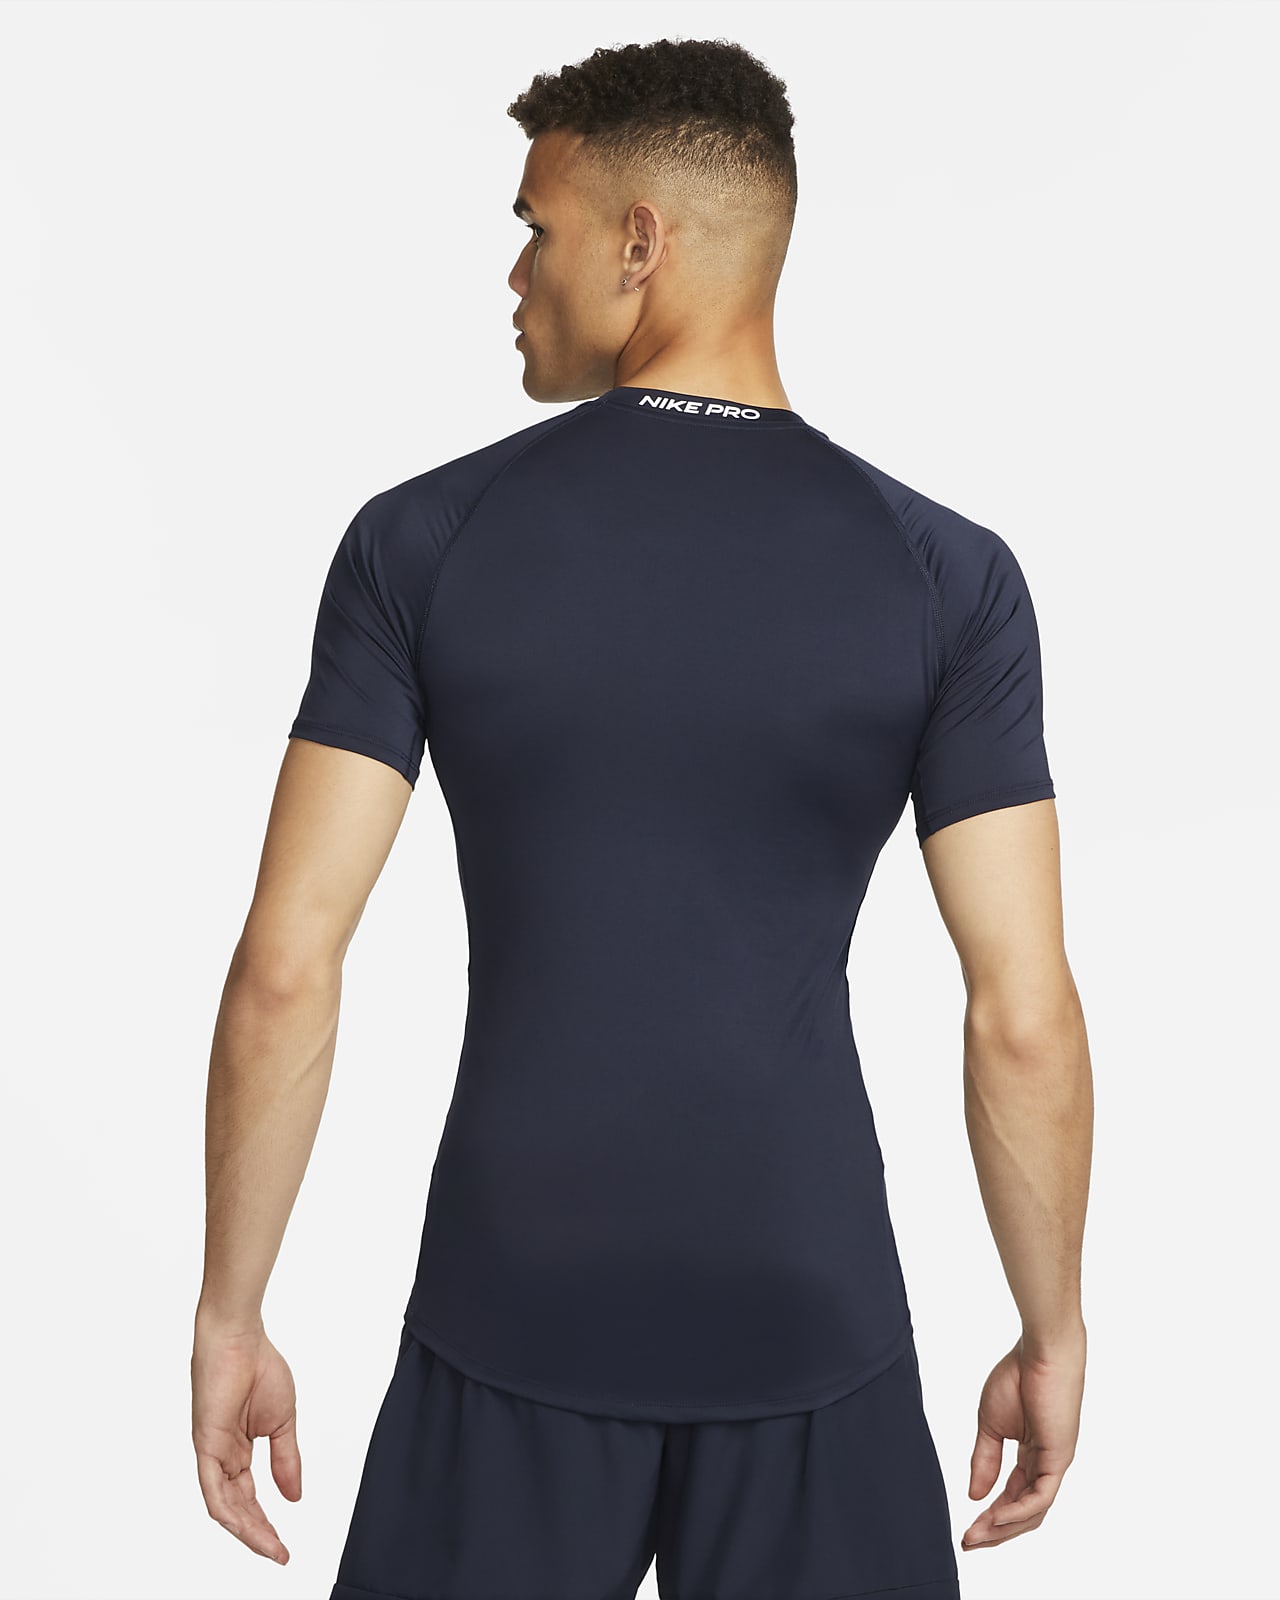 Nike Dri-fit Short-sleeve Yoga Training Top in White for Men